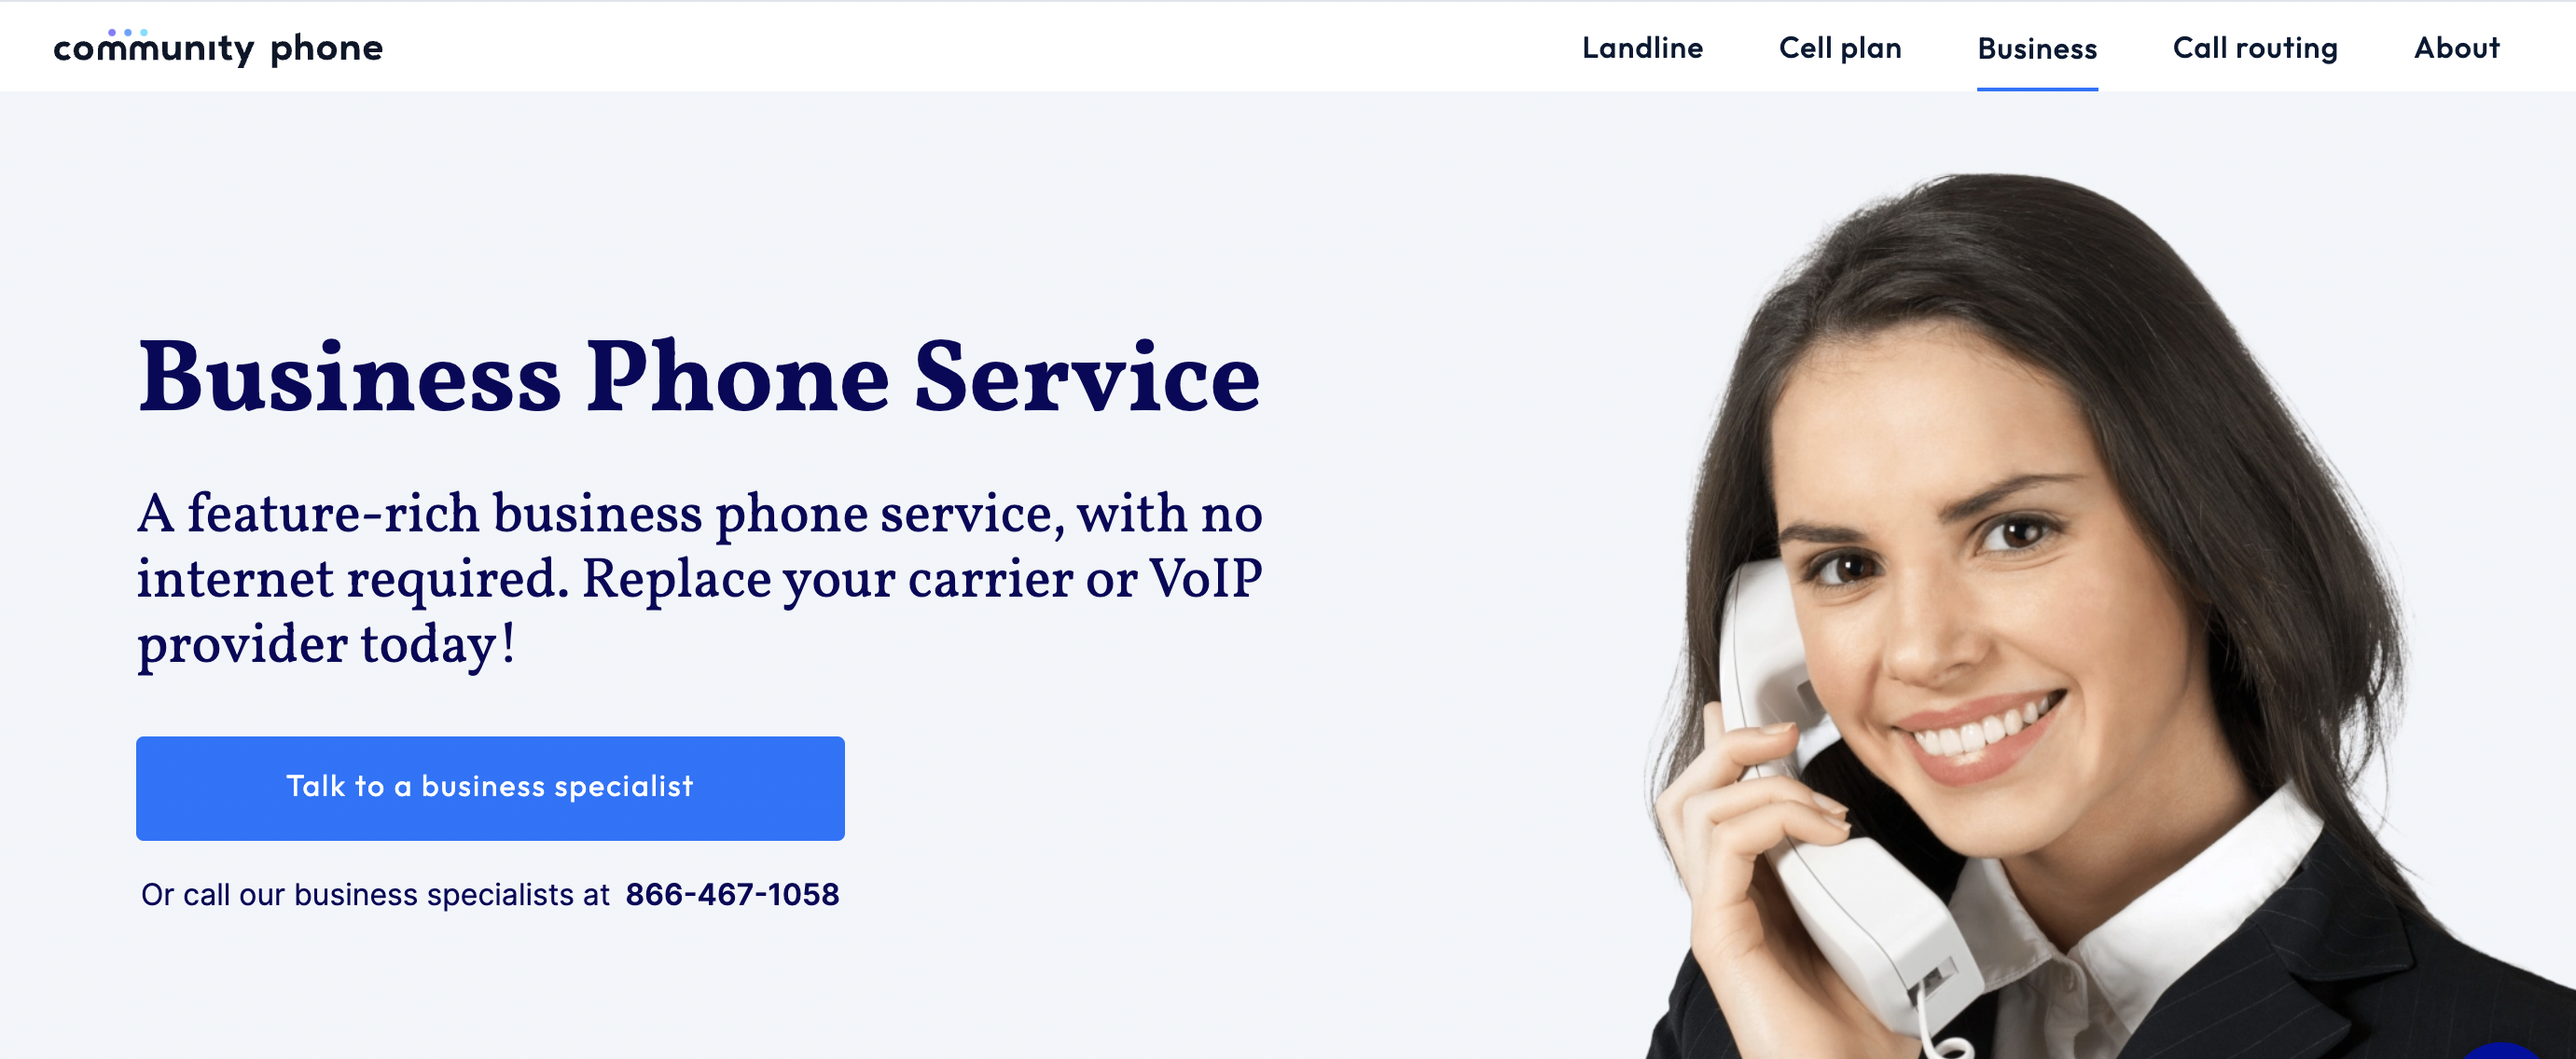 Invoxia Voice Bridge review: Never miss a landline call again - CNET